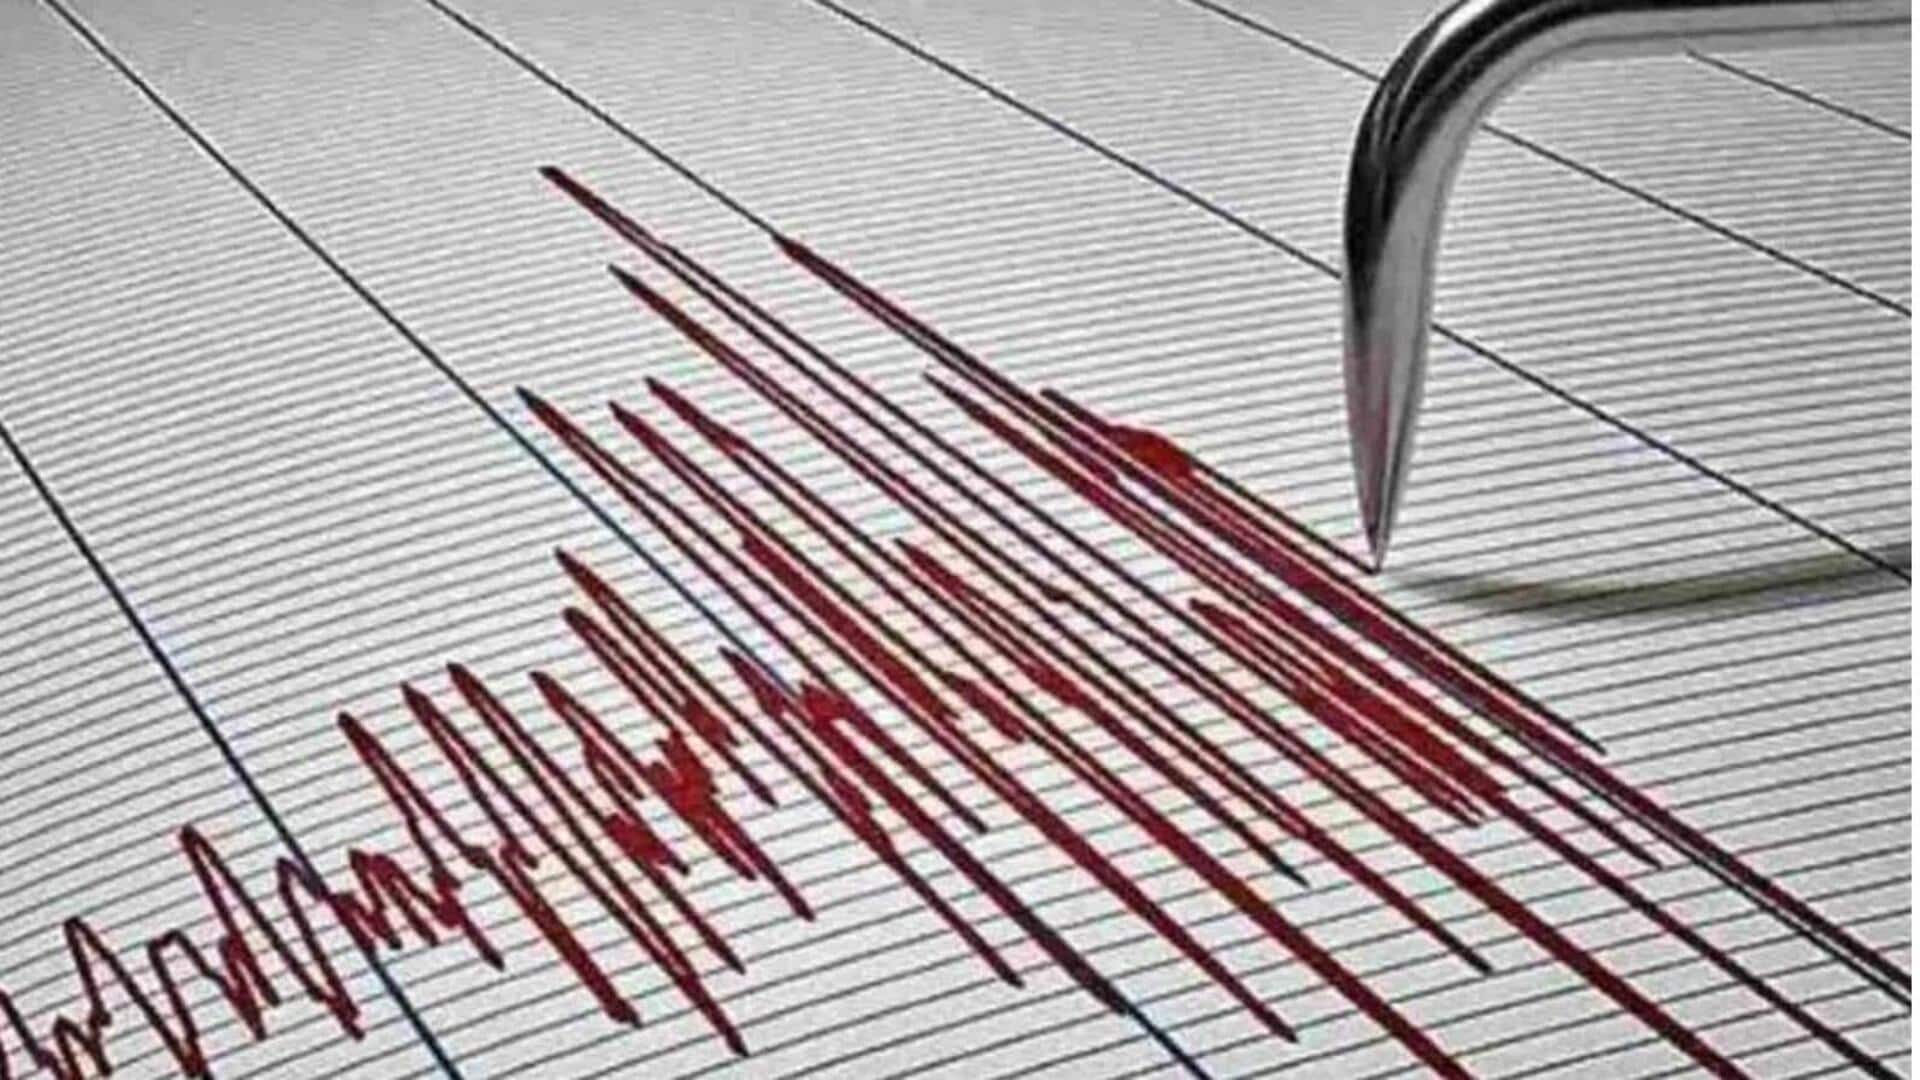 Earthquake: ఆఫ్ఘనిస్తాన్‌లో మరోసారి భూకంపం.. 4.2 తీవ్రతతో కంపించిన భూమి.. 